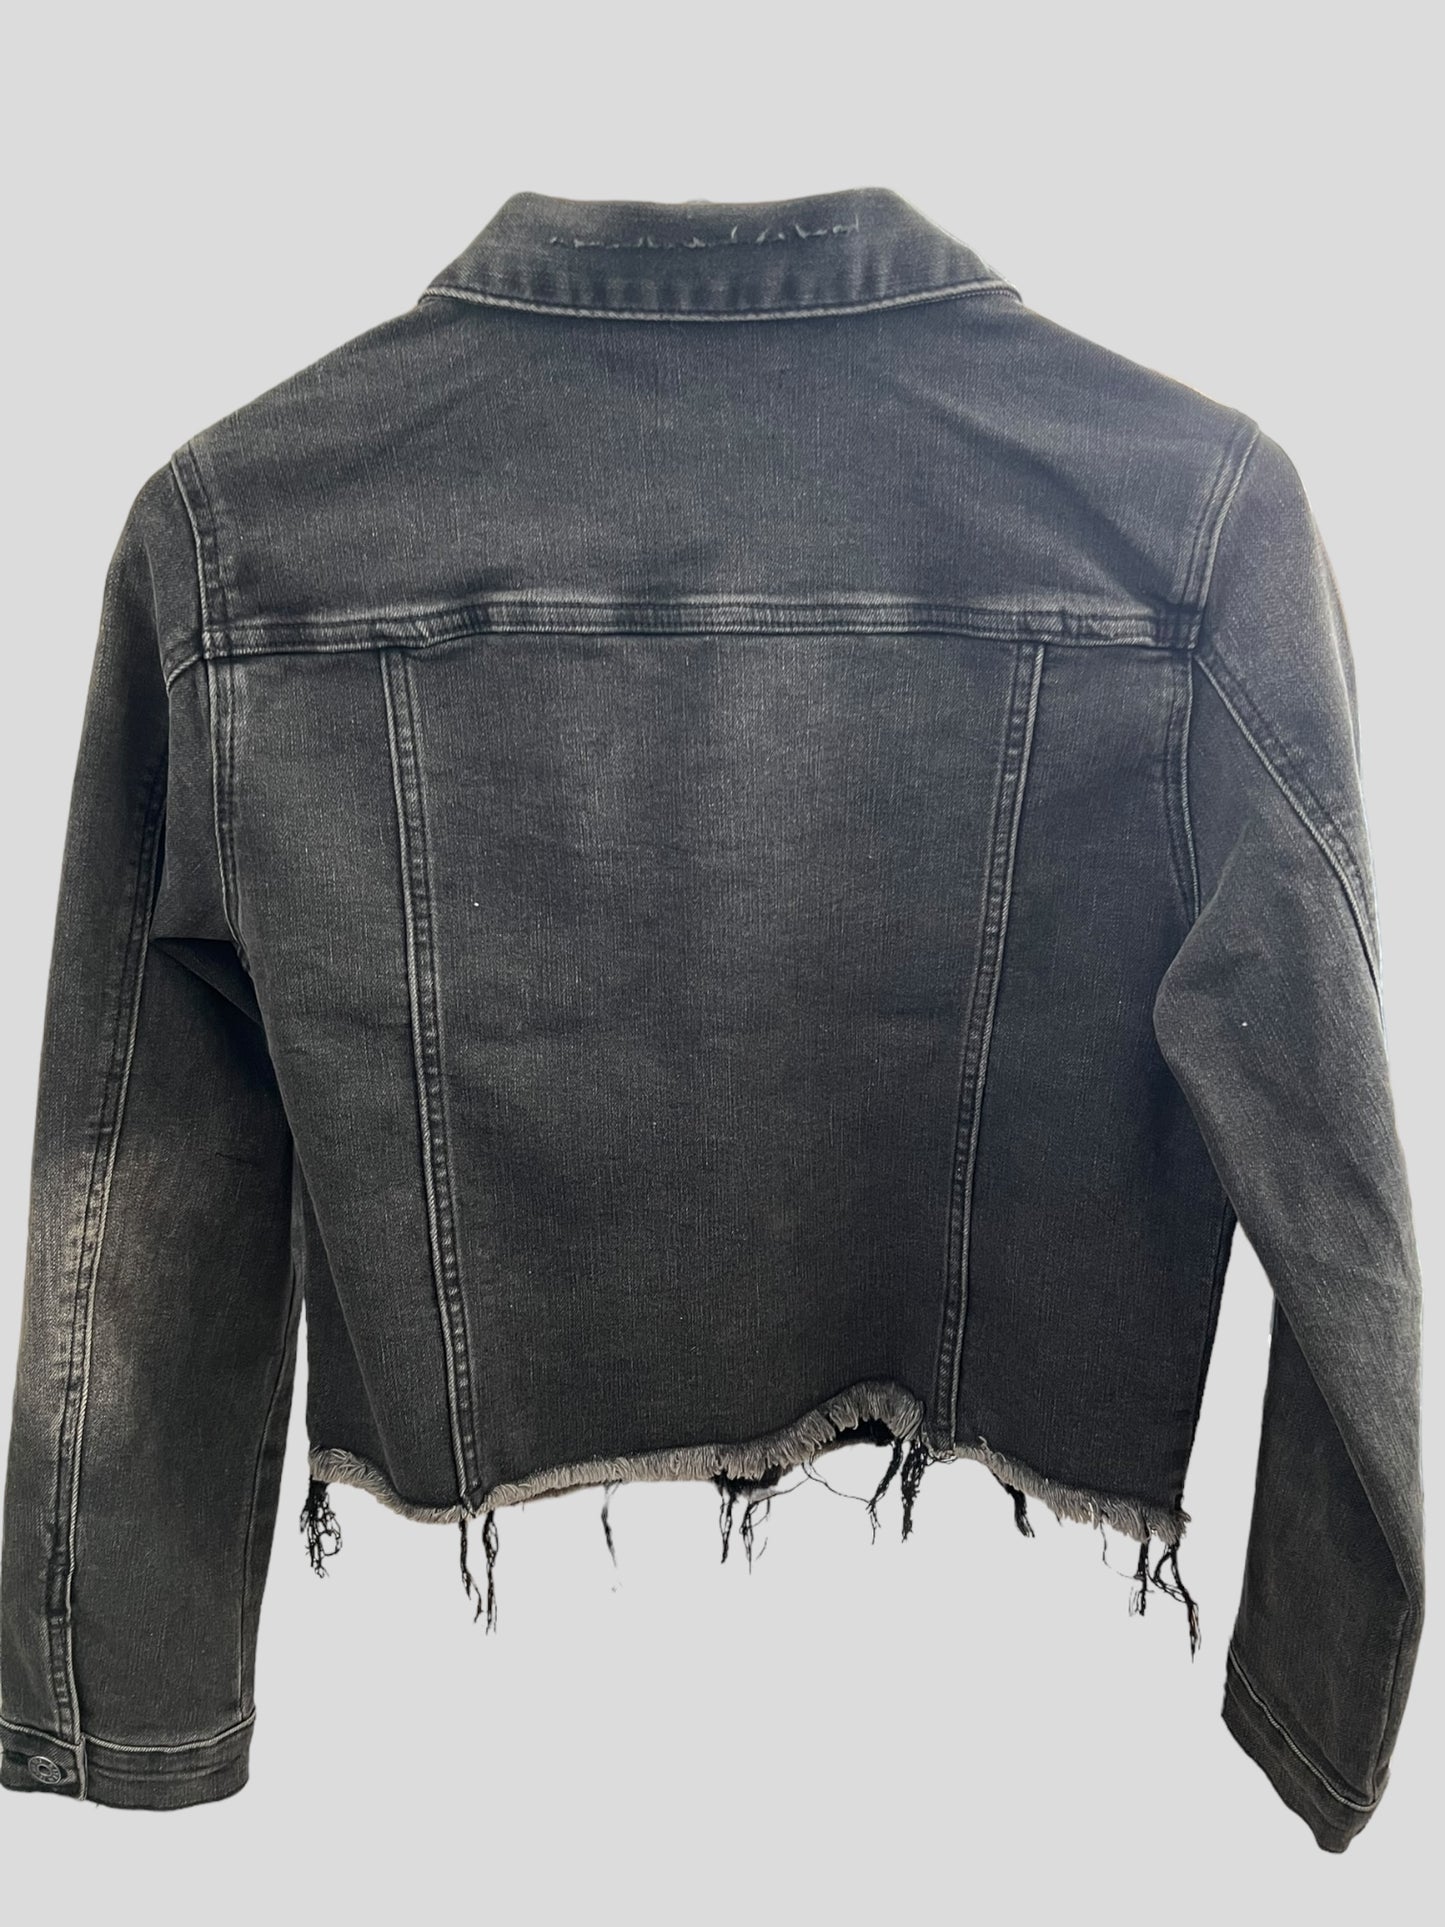 Risen Distressed Vintage Denim Jacket